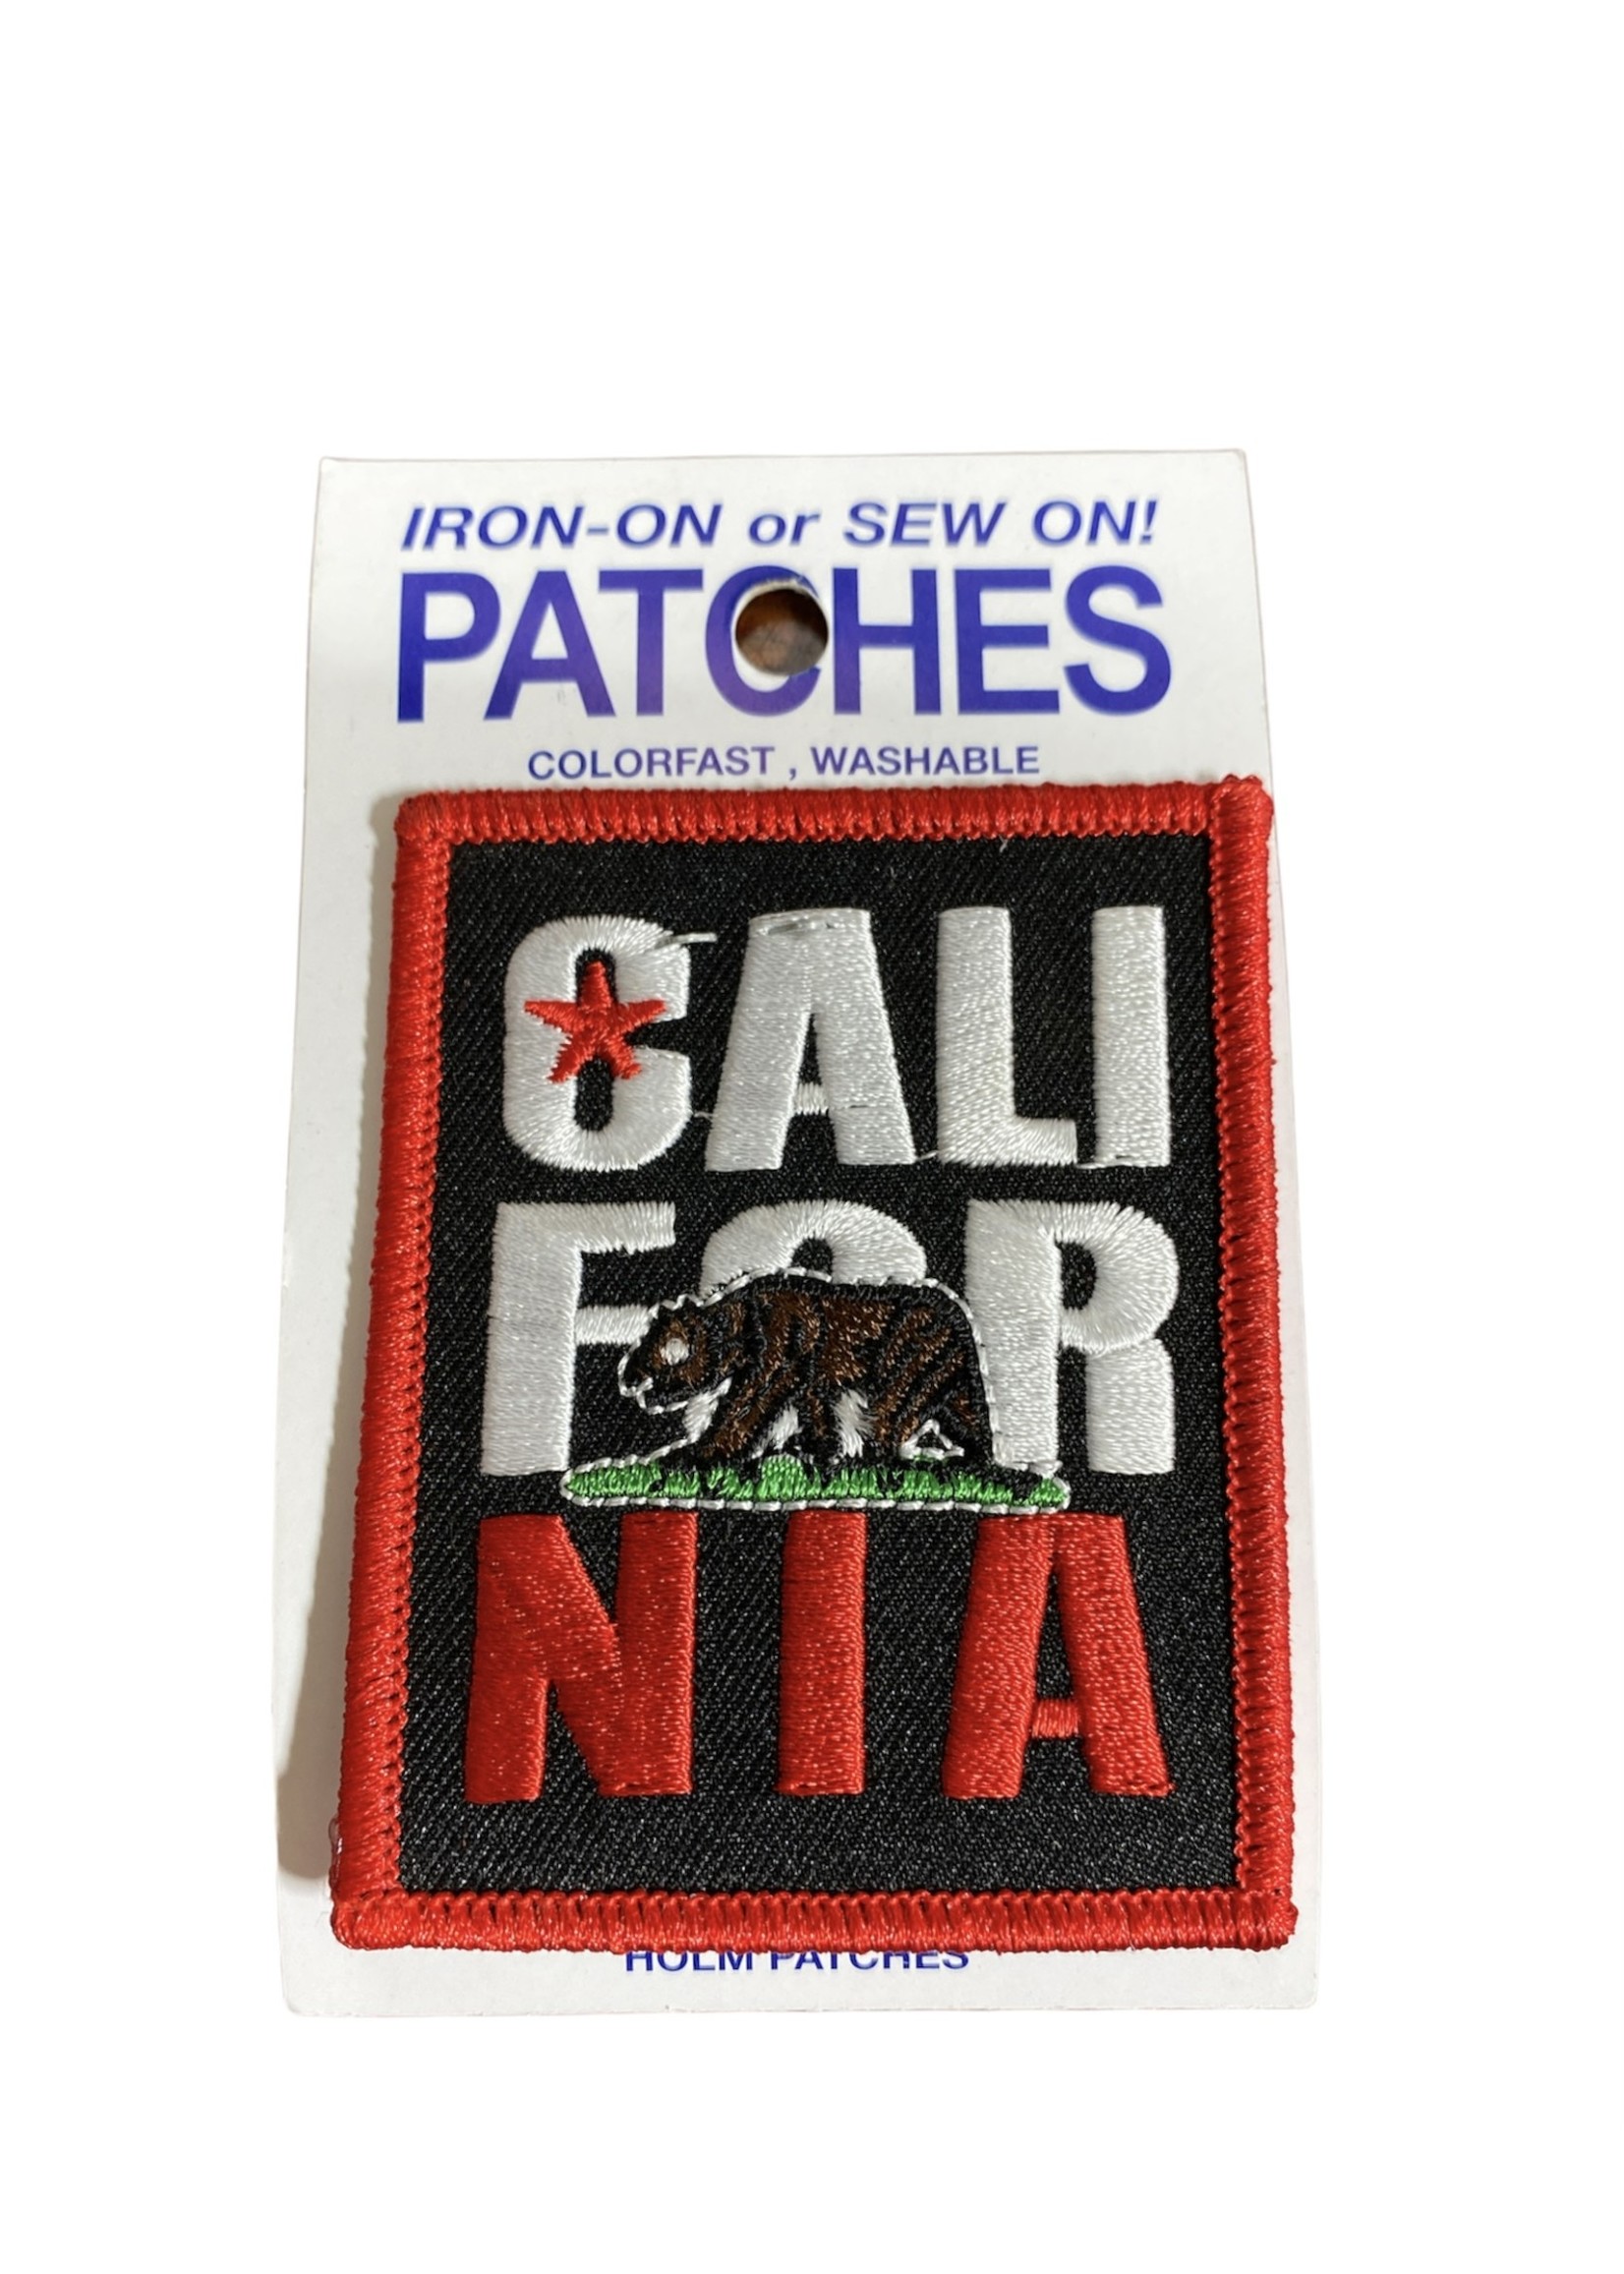 Patch (CALI FOR NIA Bear - Black)